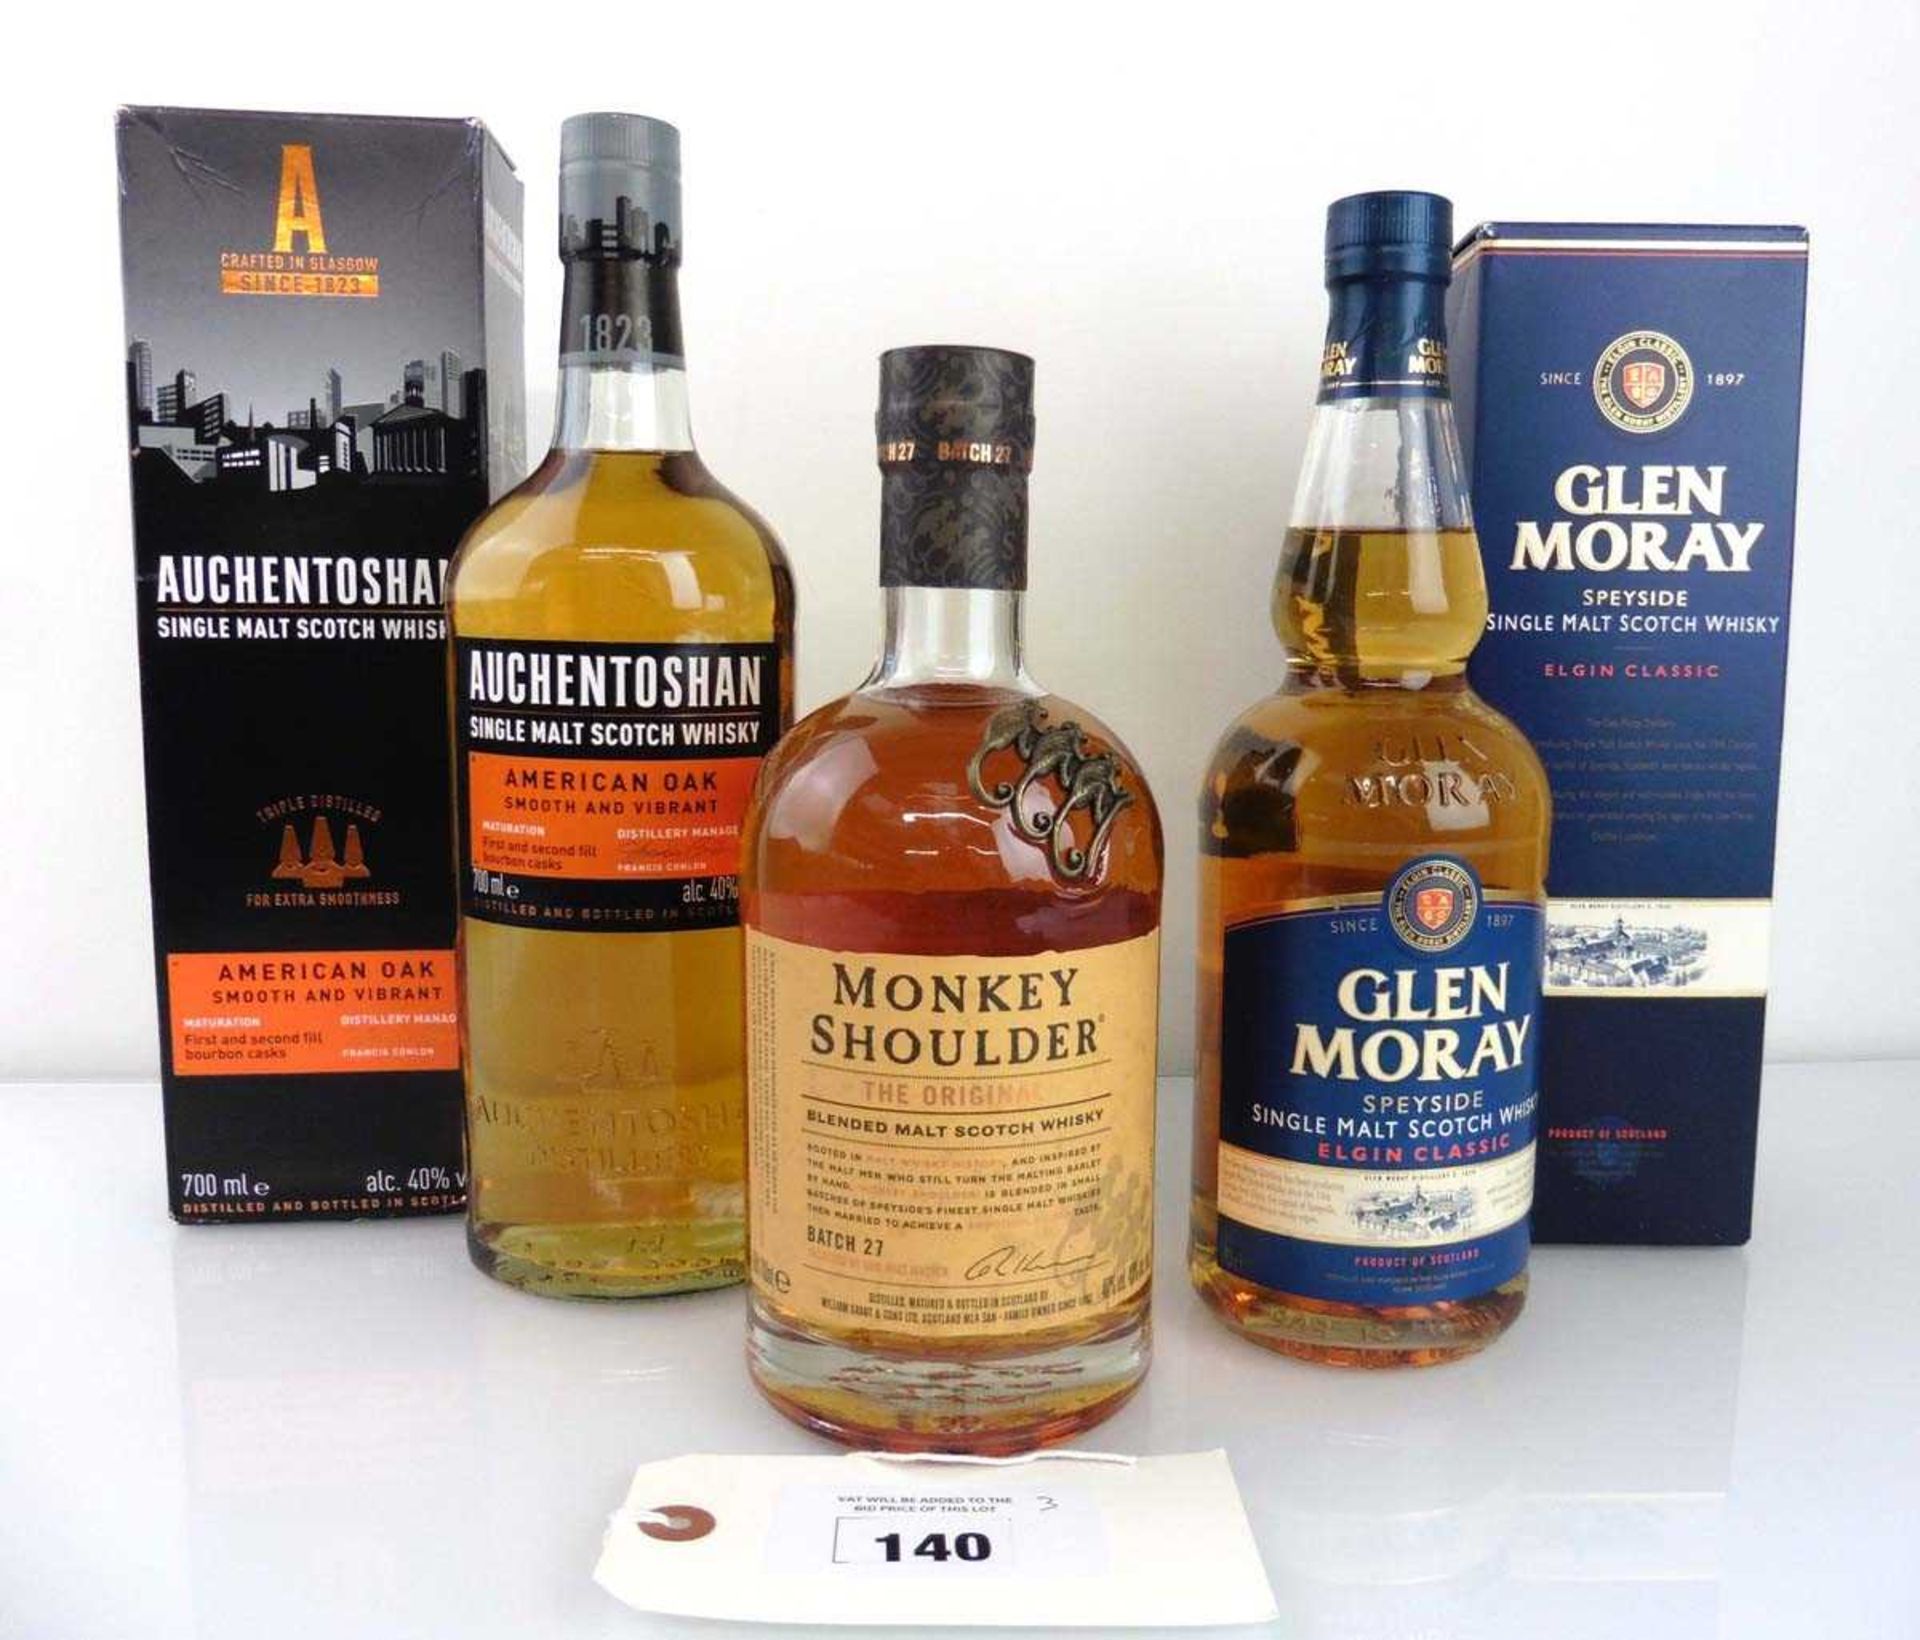 +VAT 3 bottles, 1x Auchentoshan American Oak Single Malt Scotch Whisky with box 70cl 40%, 1x Glen